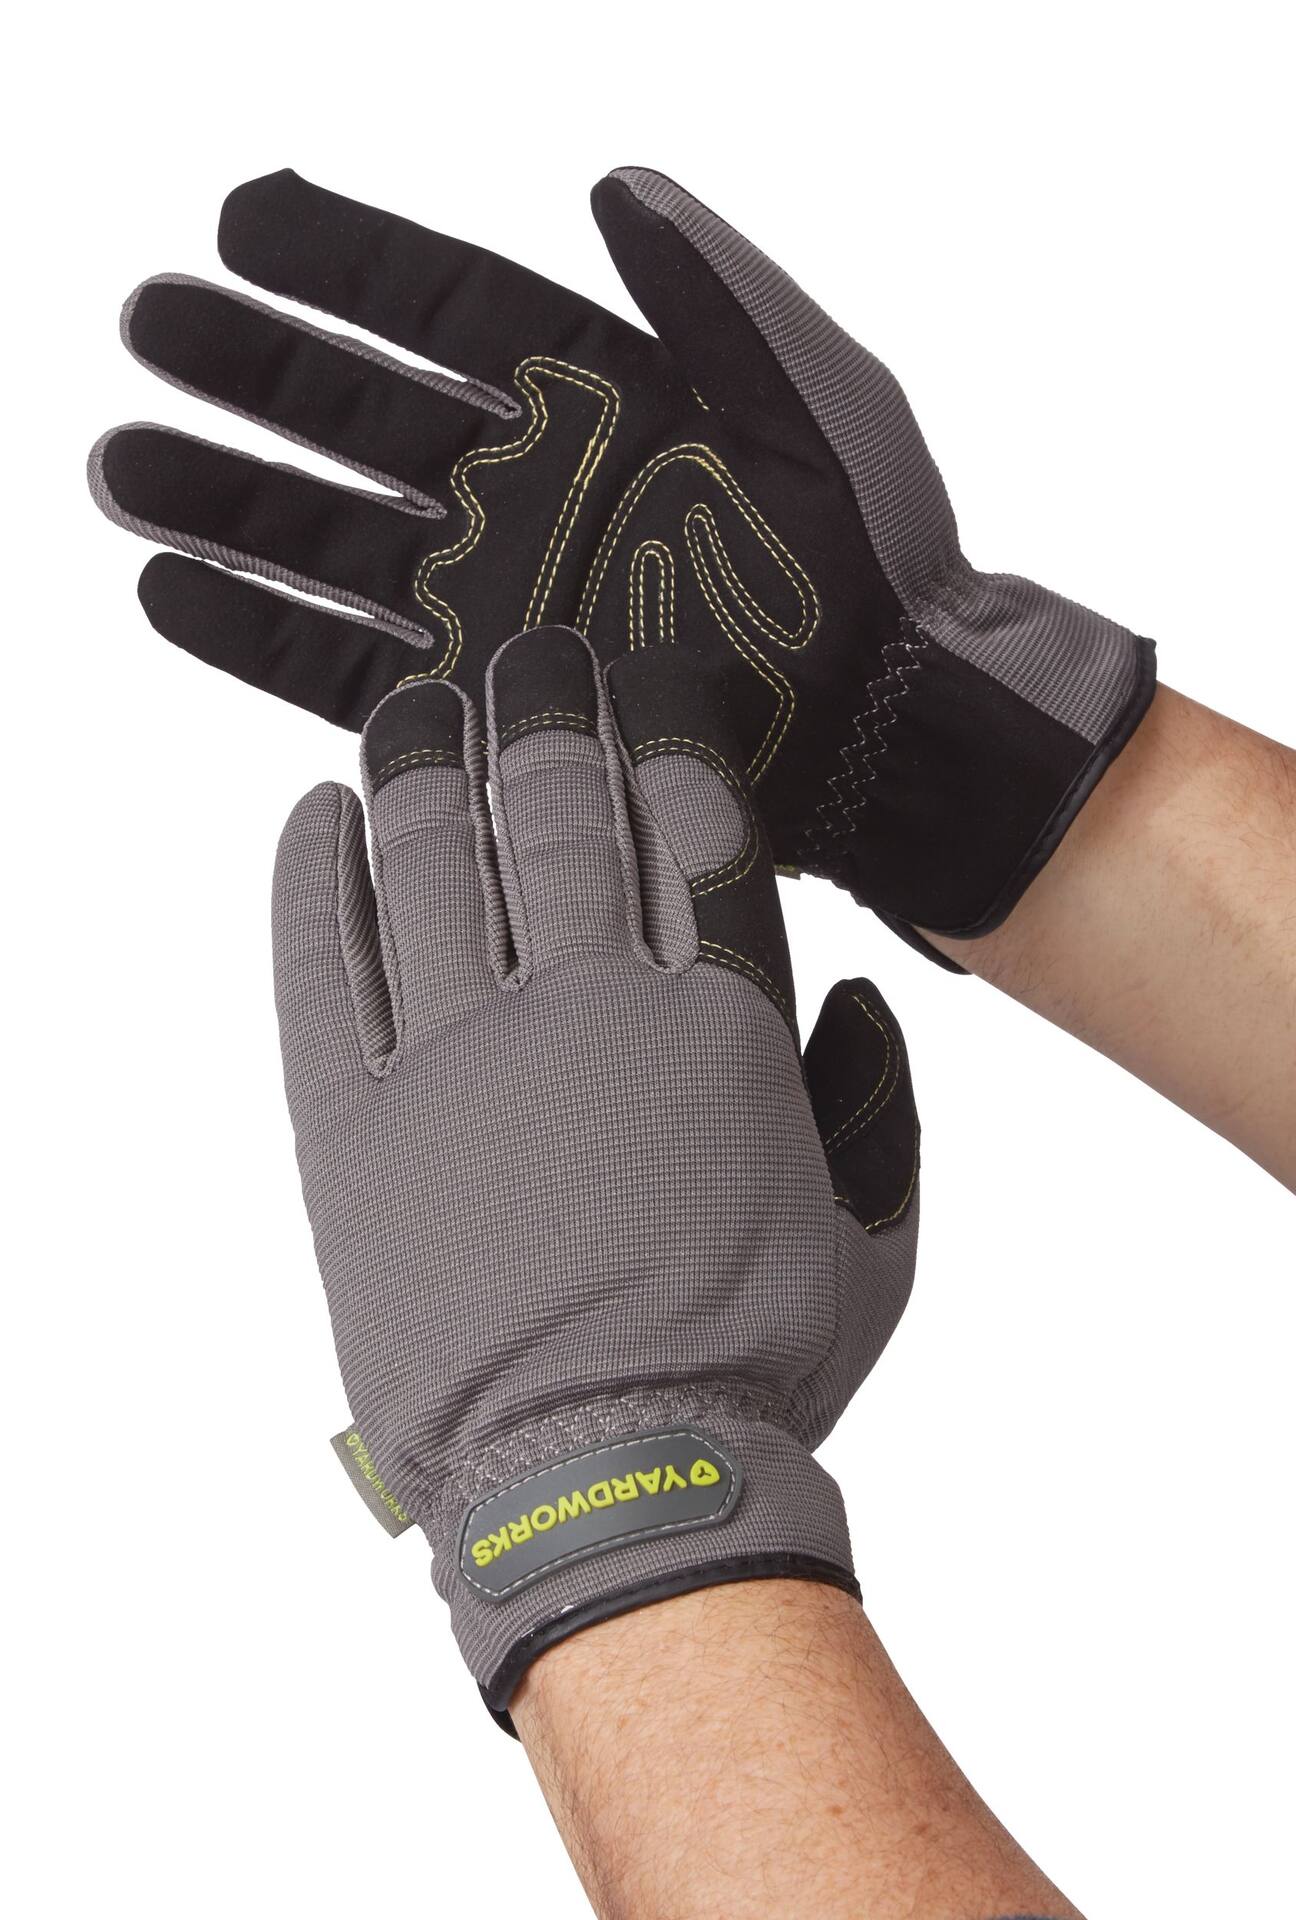 Yardworks Synthetic Leather Unisex Gardening Gloves, Assorted 